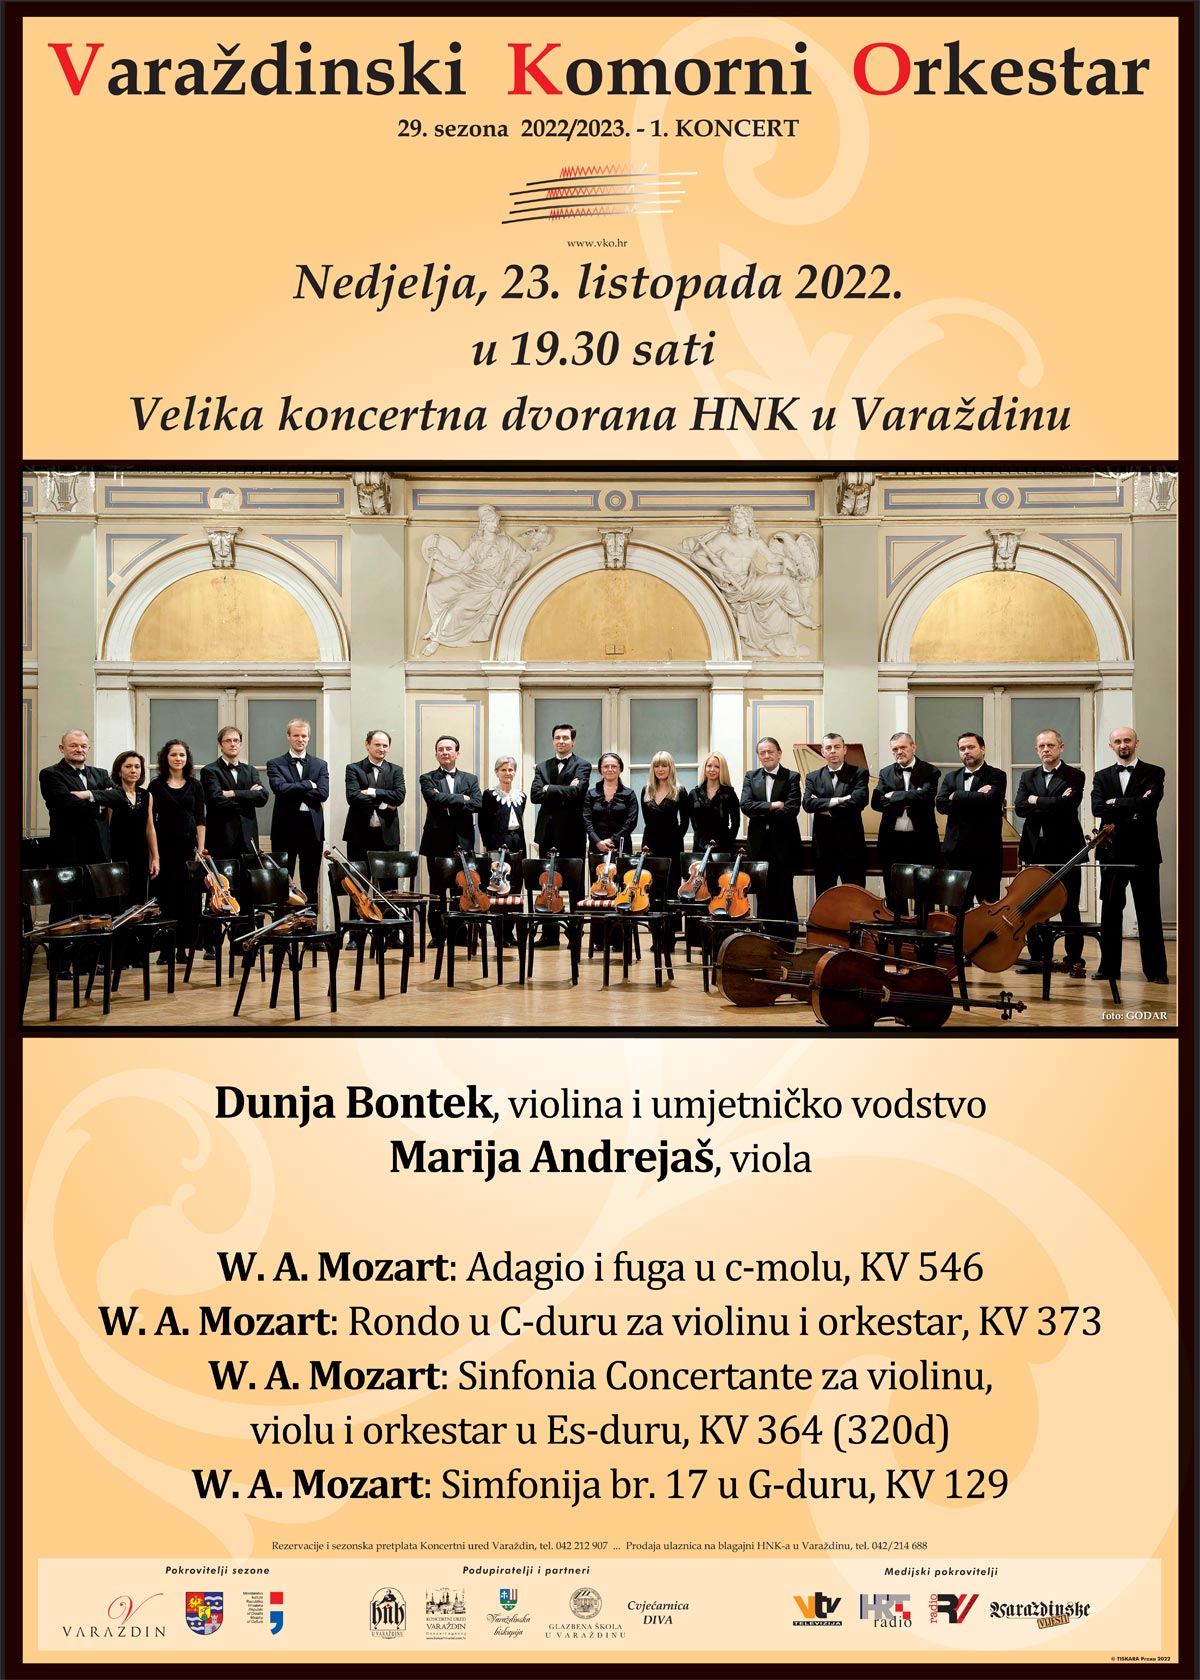 Prvi koncert 29. sezone Varaždinskog komornog orkestra